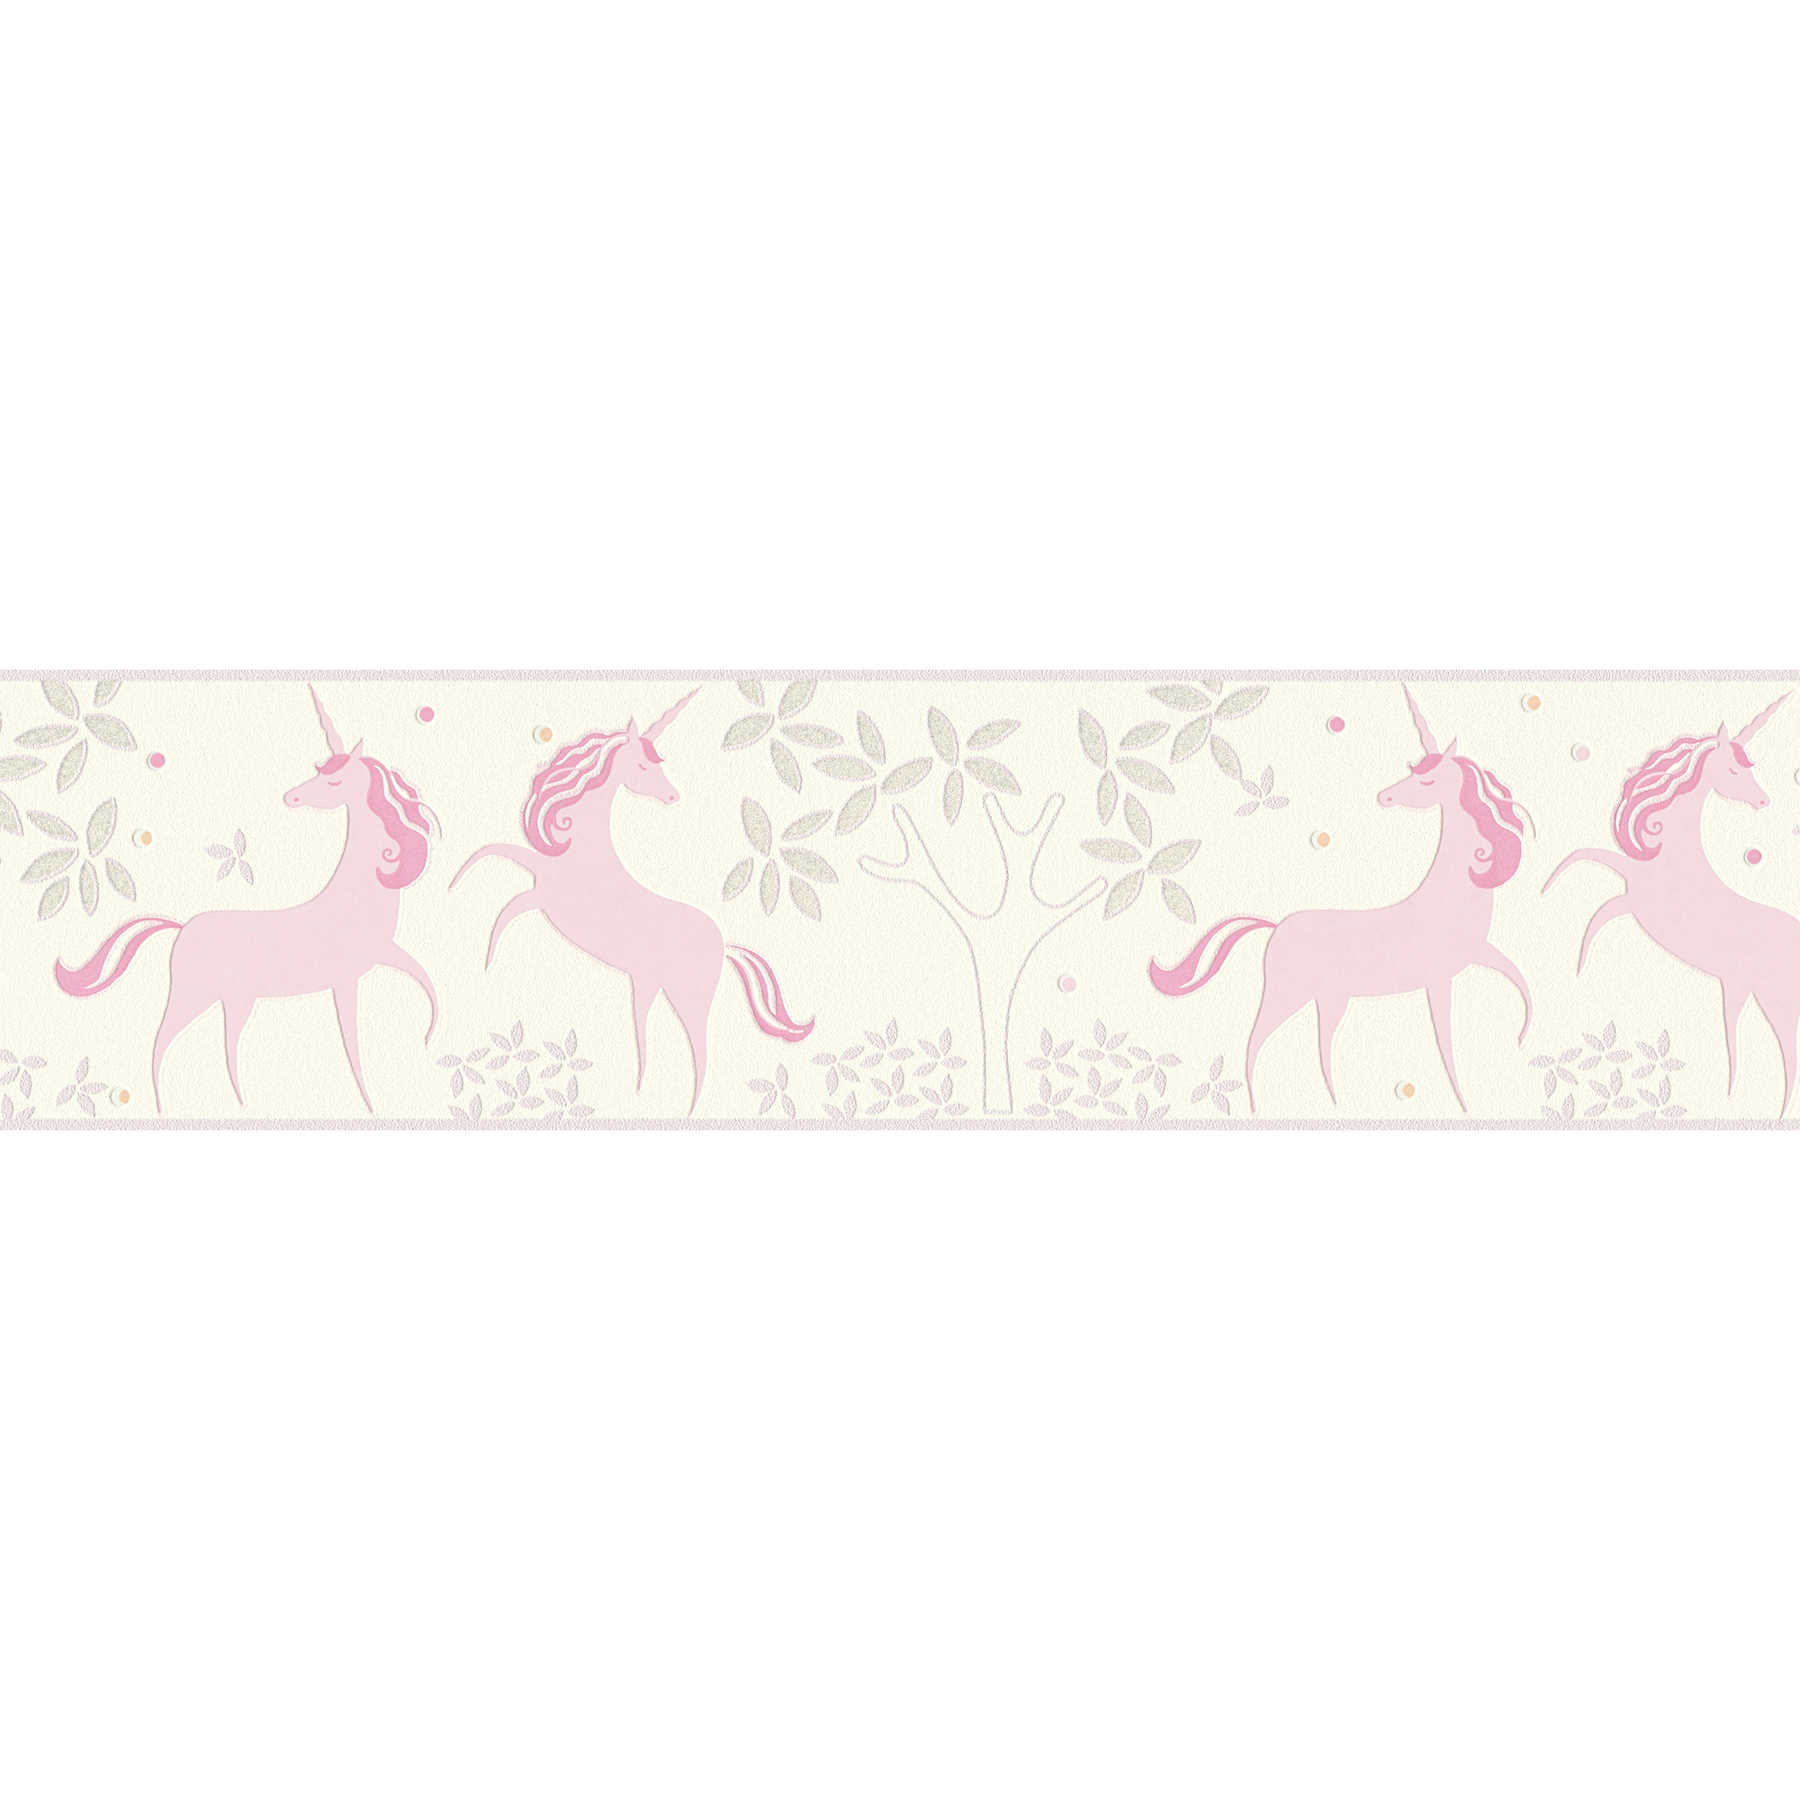         Nursery border with unicorn & glitter - pink, grey
    